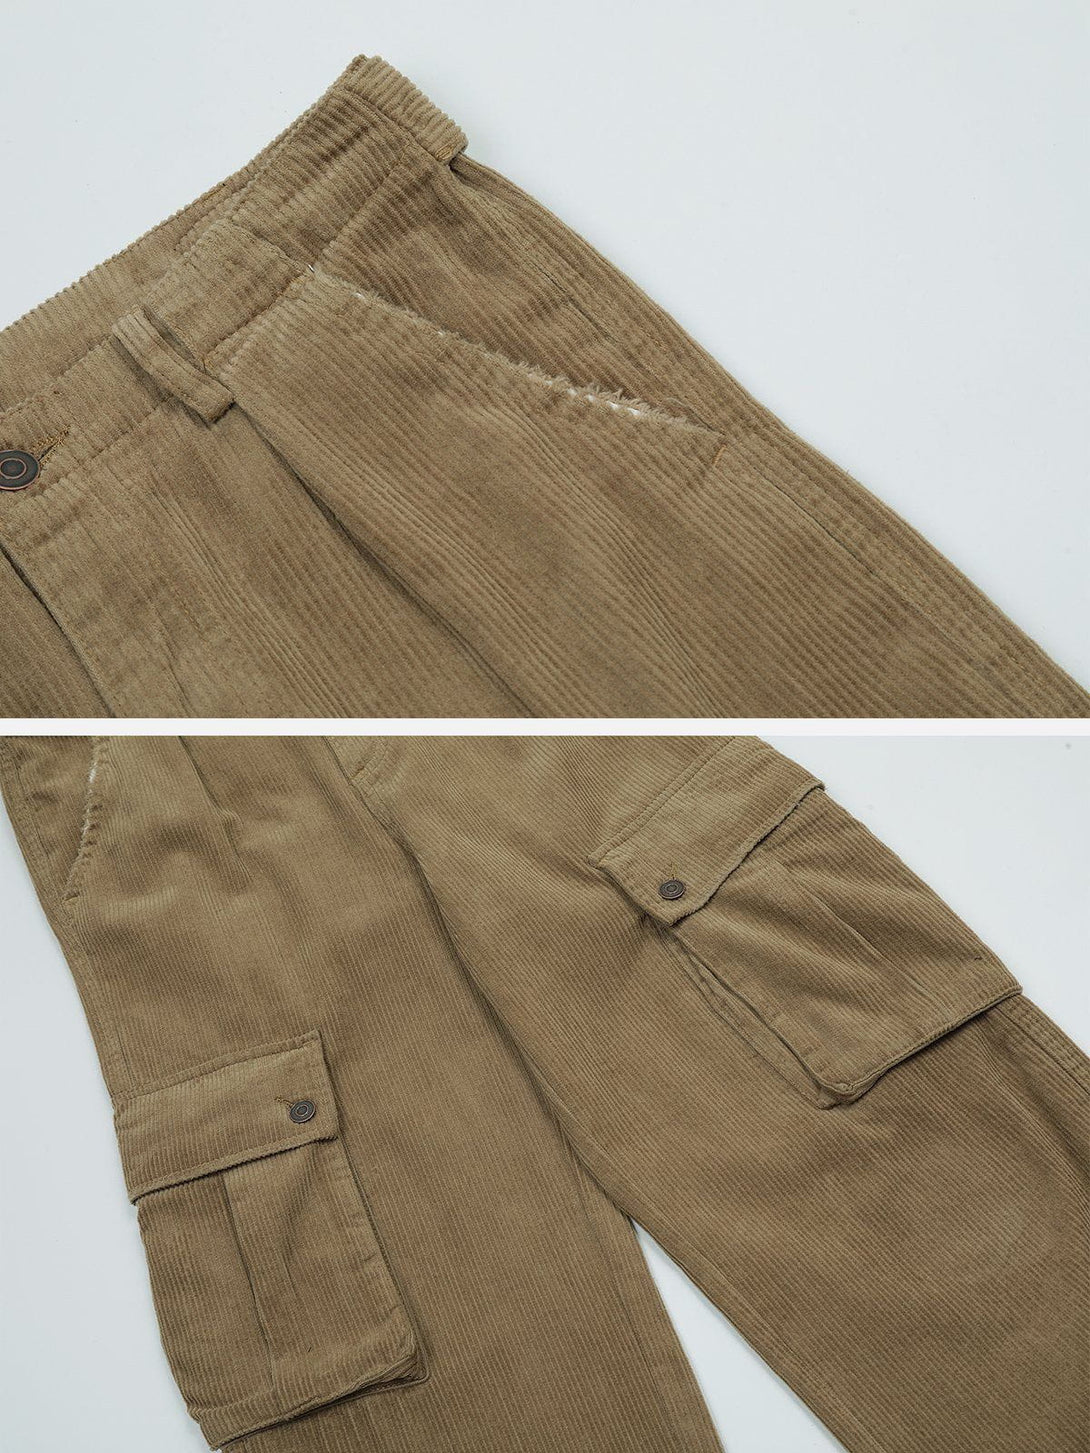 Majesda® - Solid Corduroy Multi Pocket Cargo Pants outfit ideas streetwear fashion